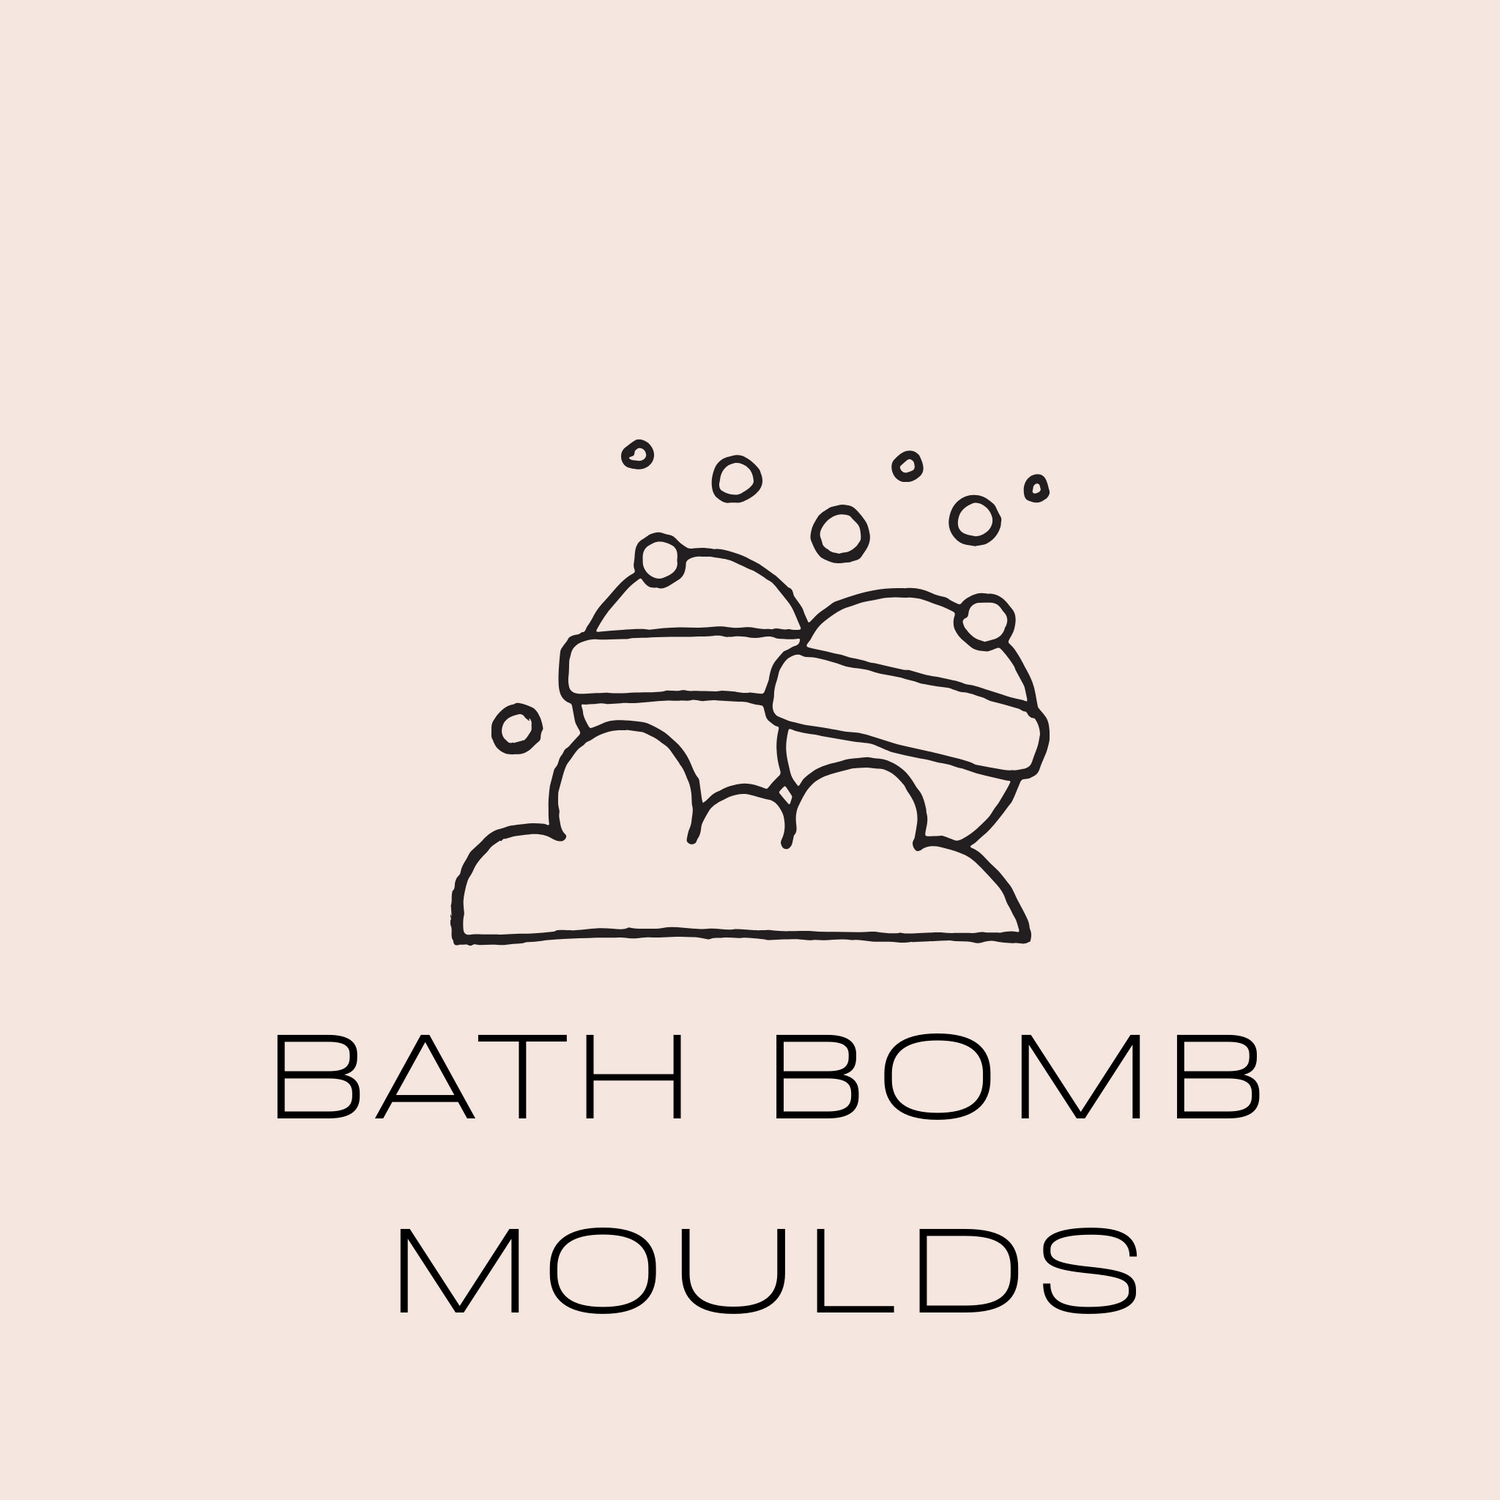 2D printed bath bomb moulds